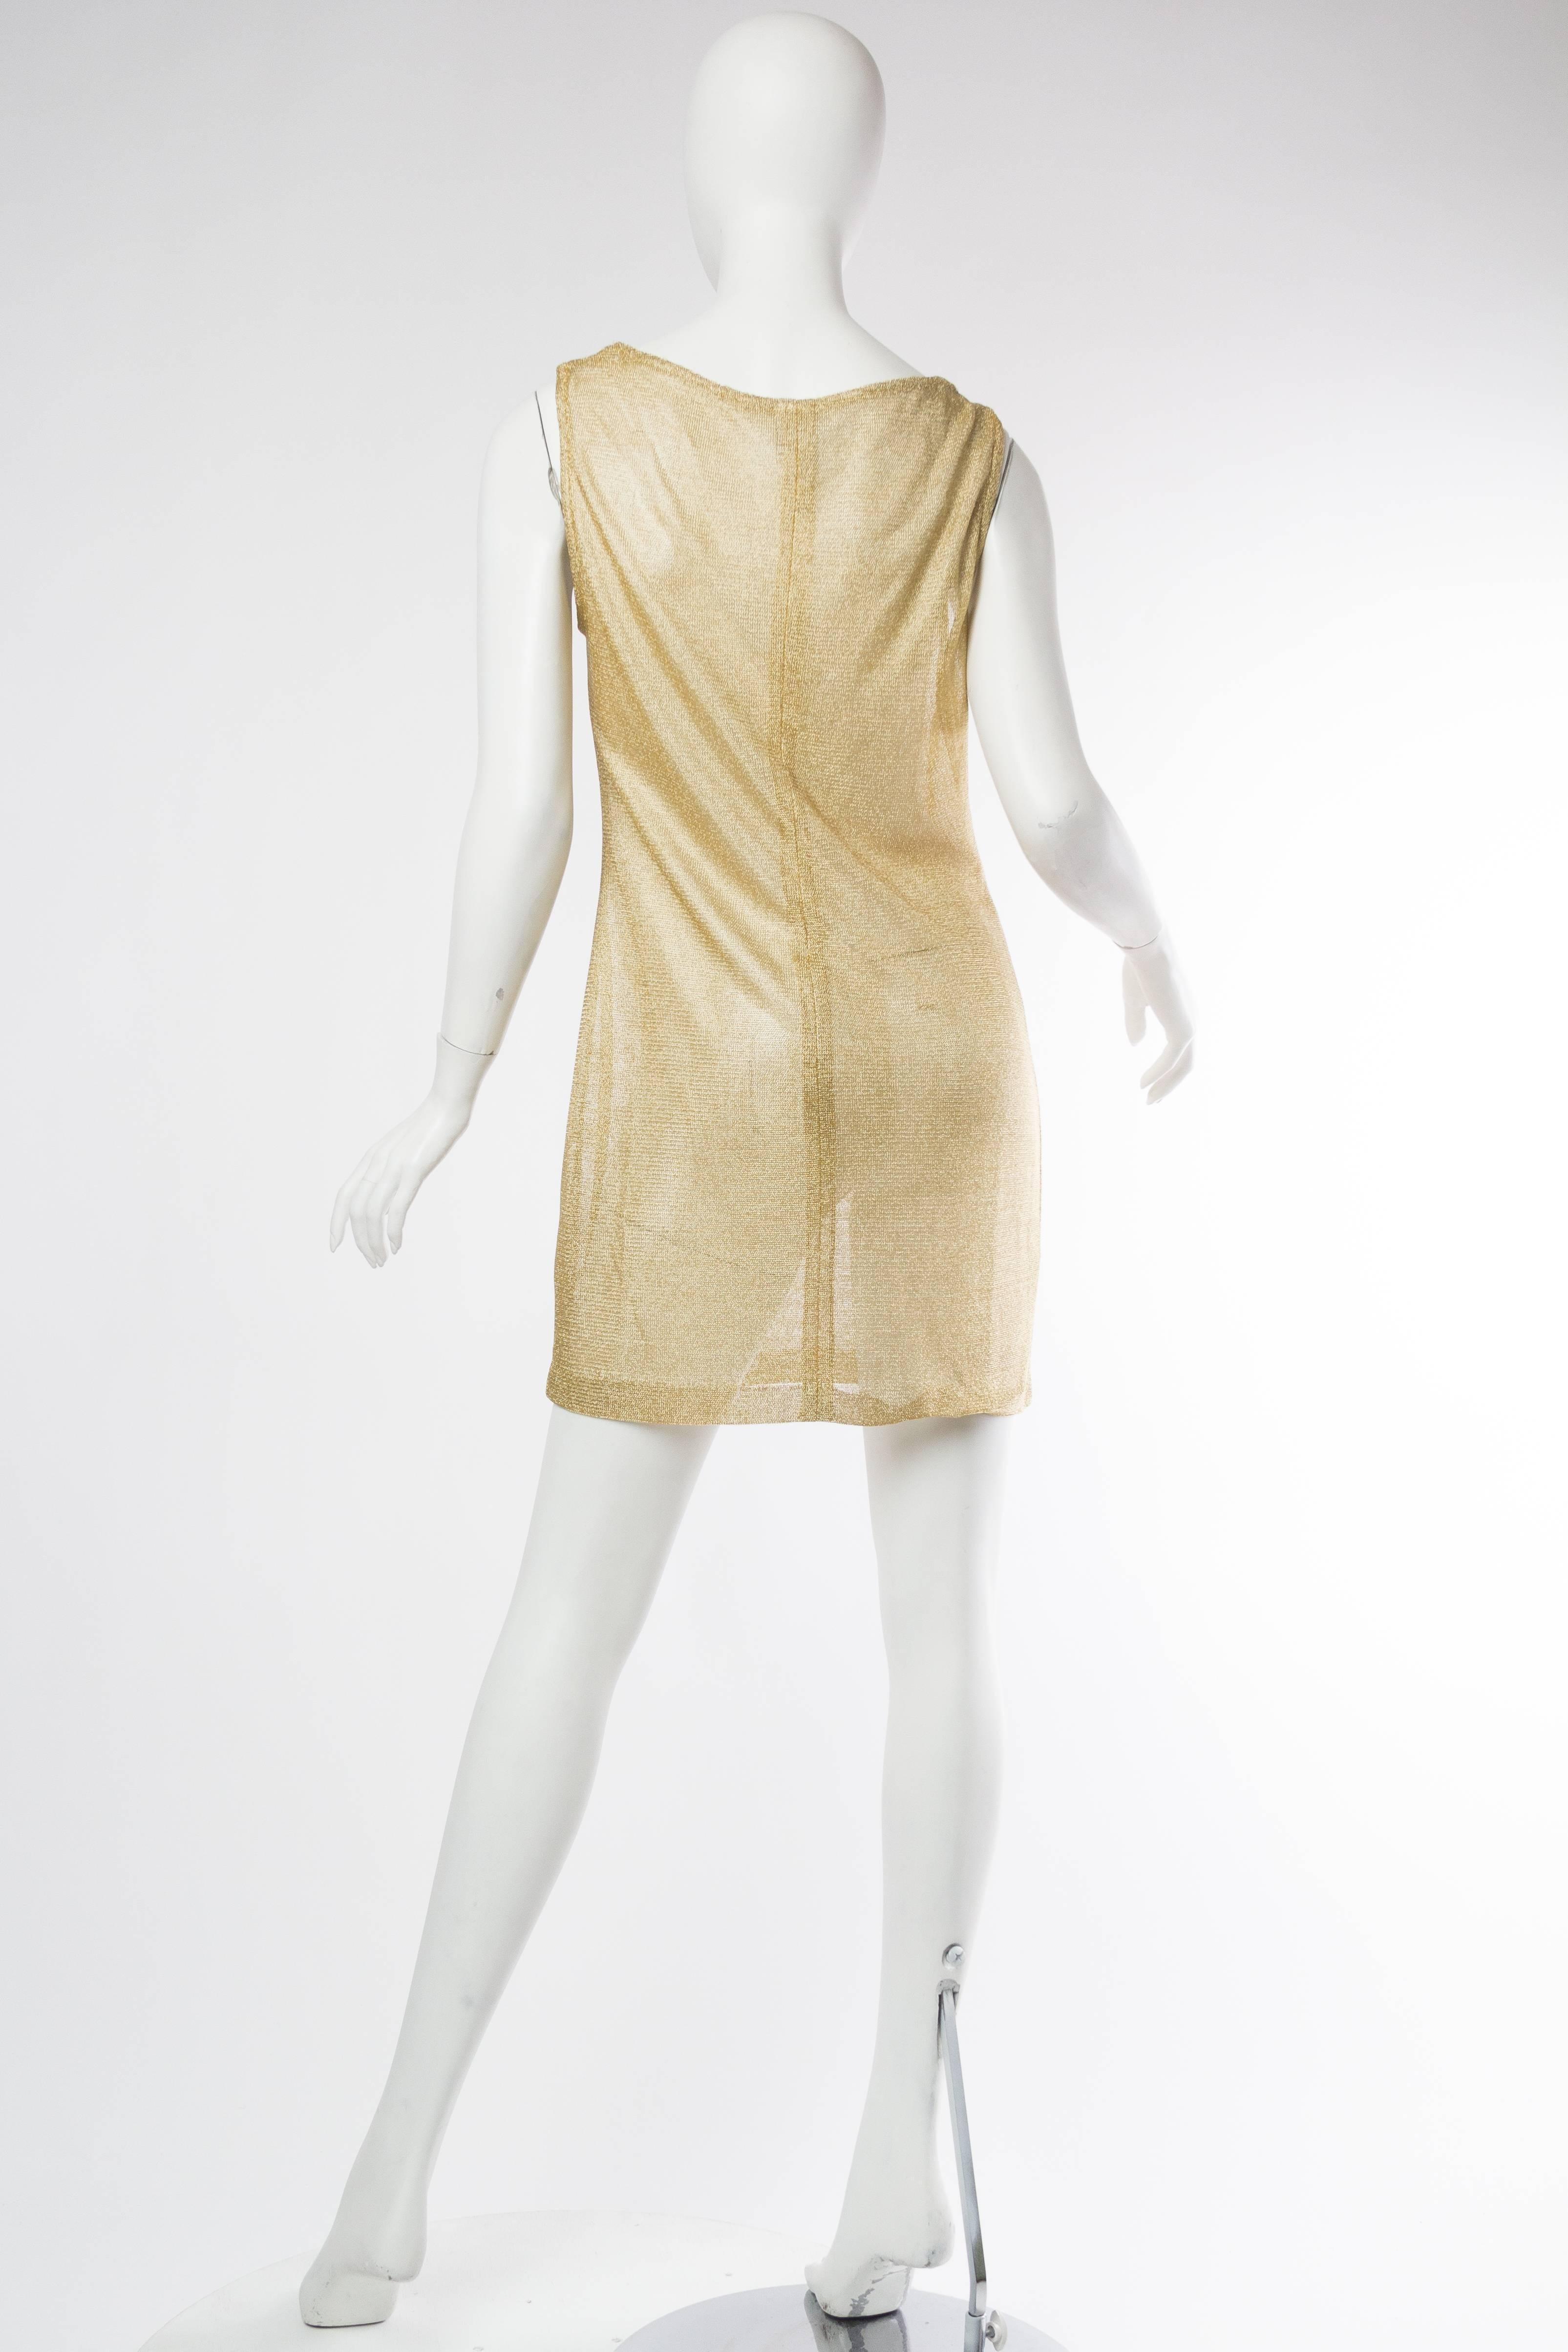 1980S Metallic Gold Lamé Rayon & Lurex Knit Sheer Cowl Neck Mini Cocktail Dress 1